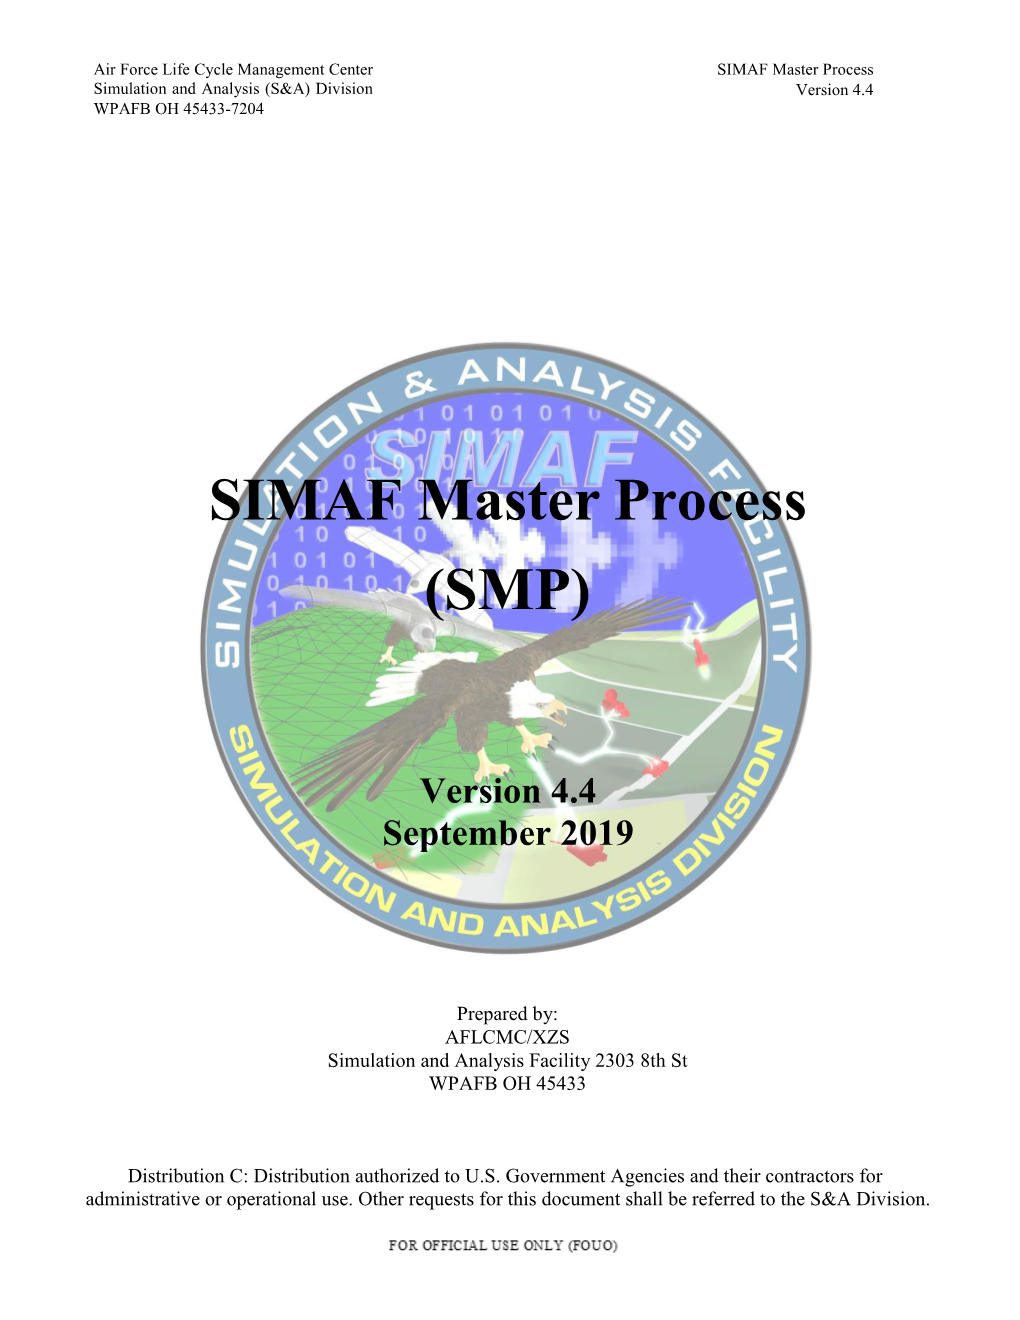 SIMAF Project Handbook